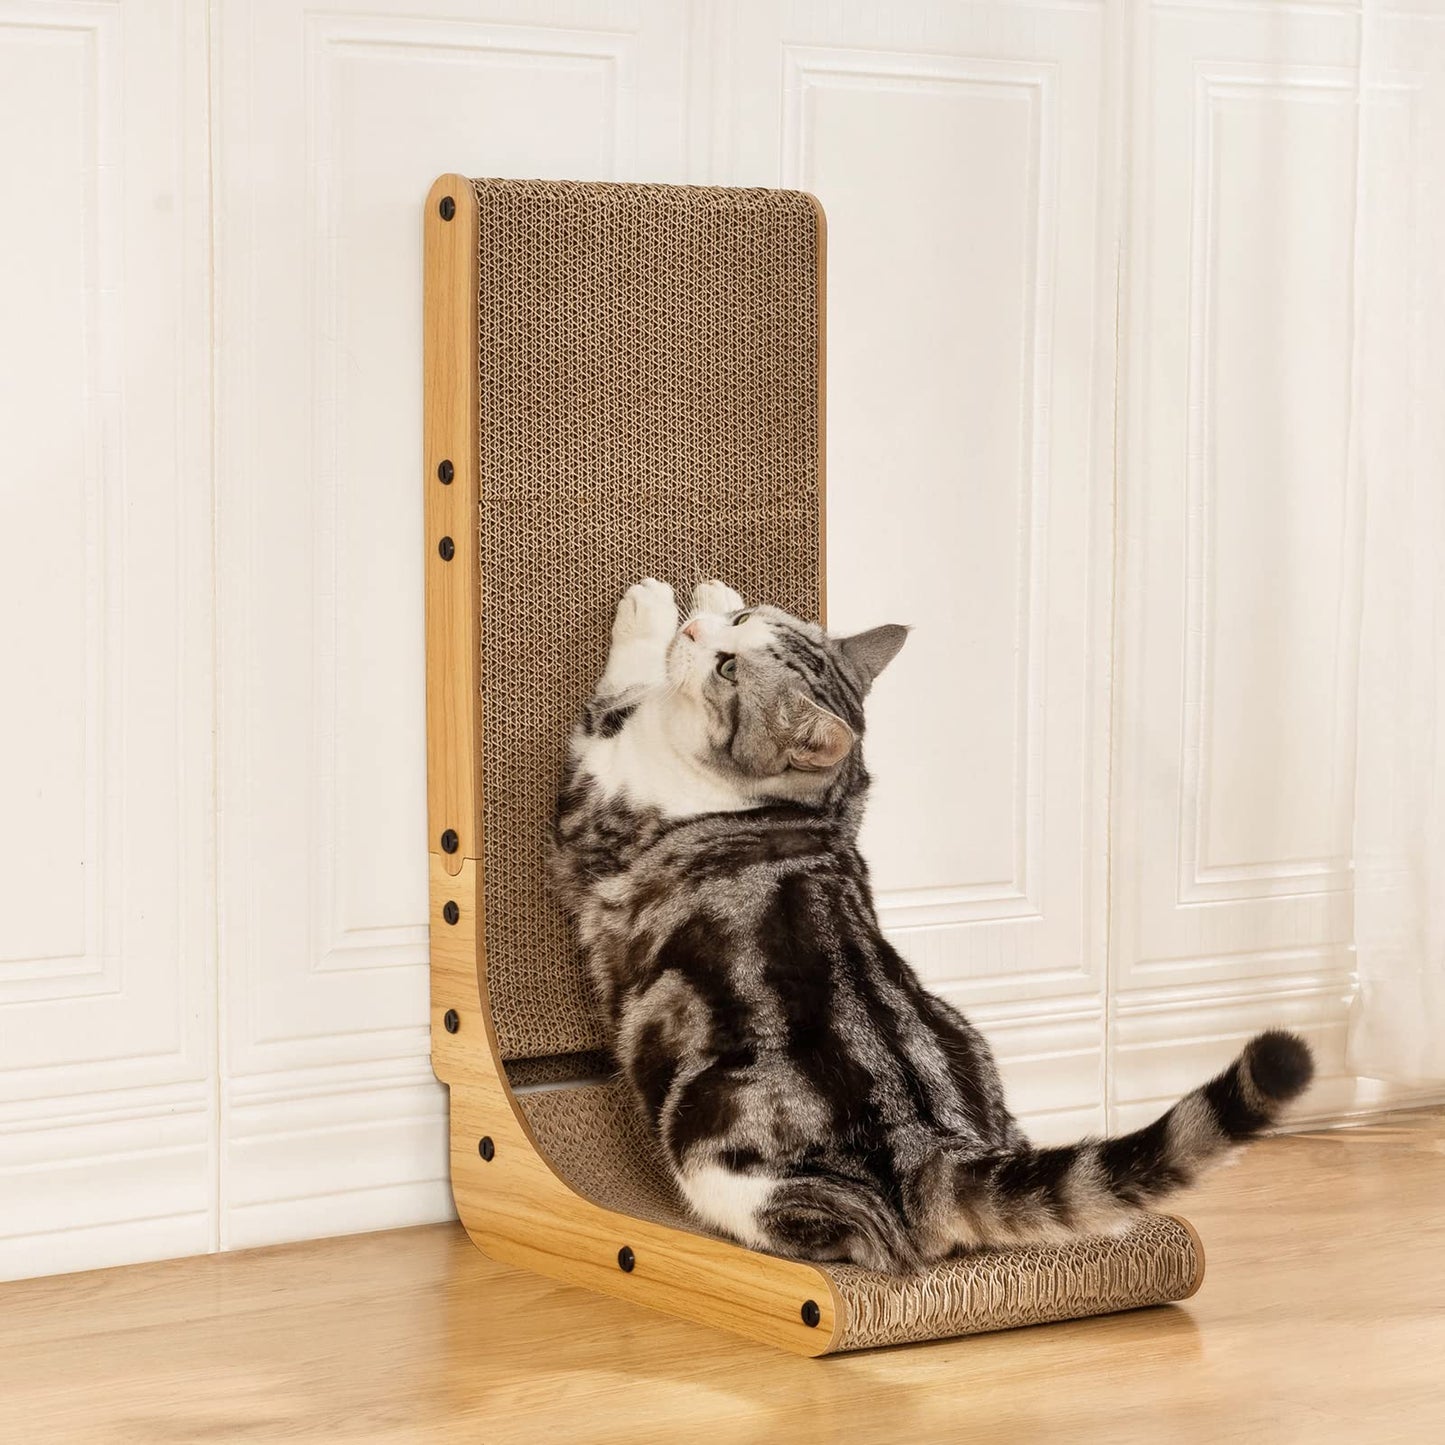 Poils bebe L Shape Cat Scratcher, 26.8 Inch Cat Scratchers for Indoor Cats, Protecting Furniture Cat Scratch Pad